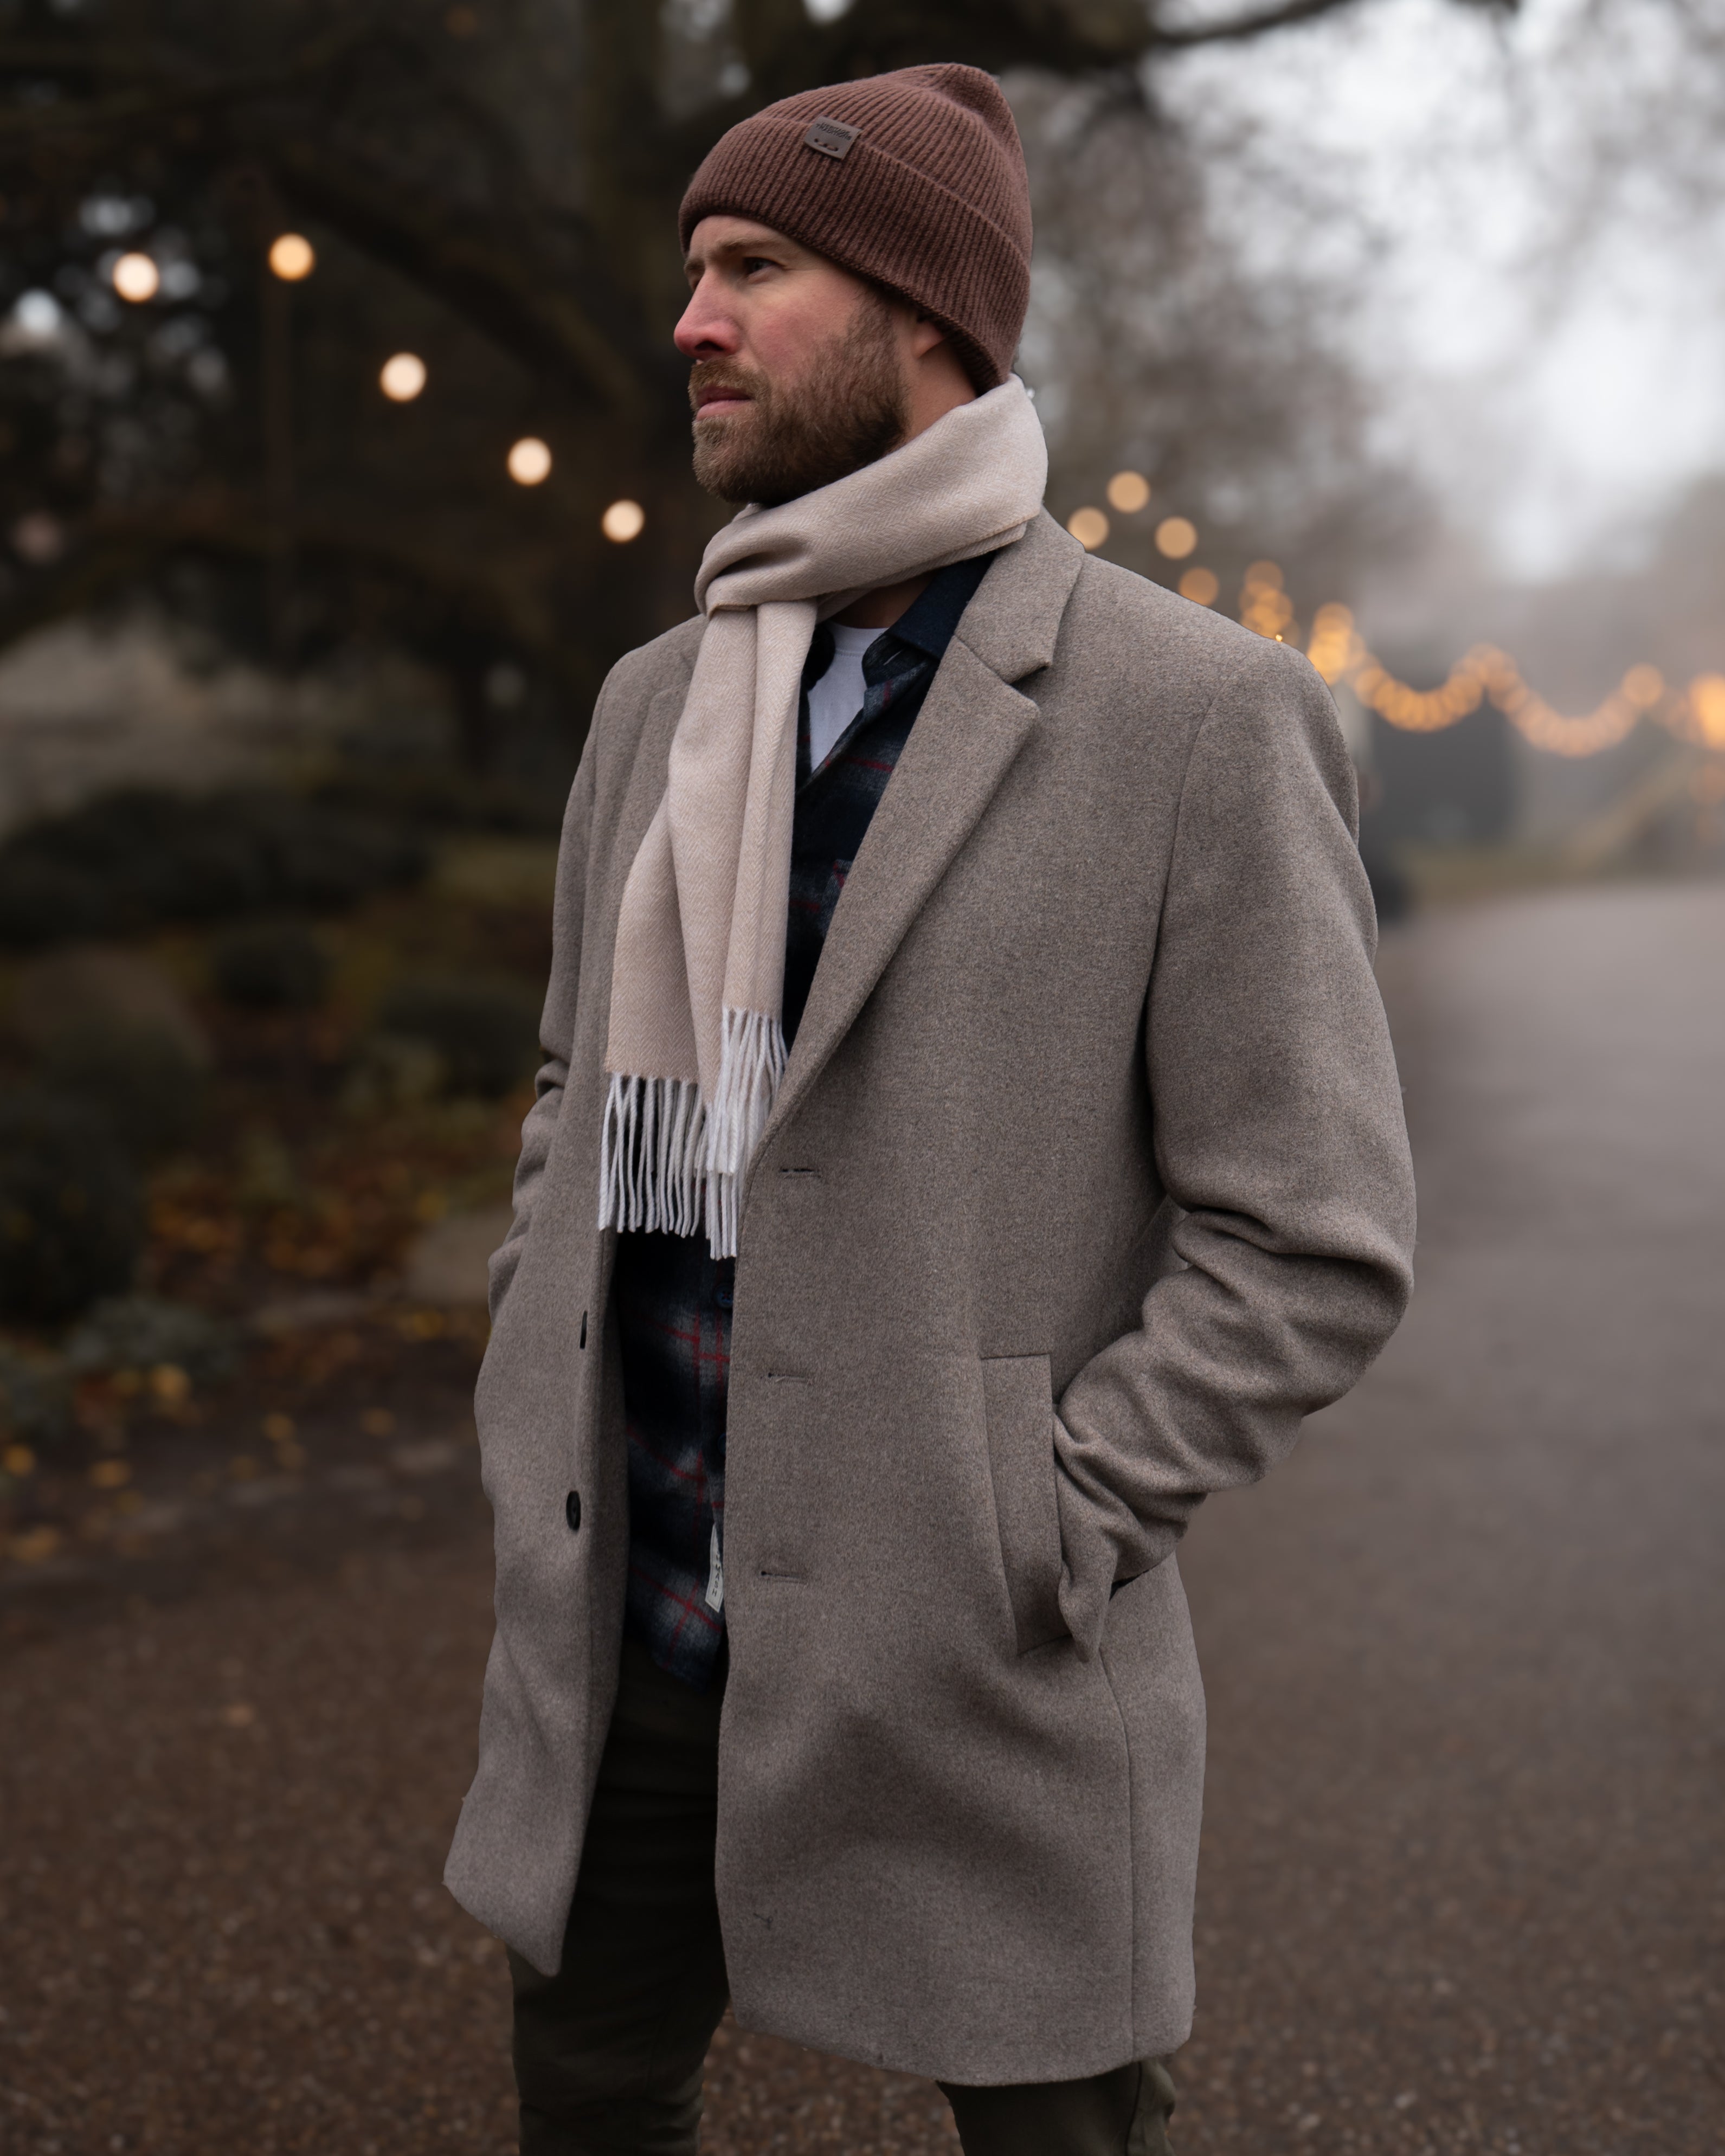 Kris Winter Casual Look in York – Master Debonair